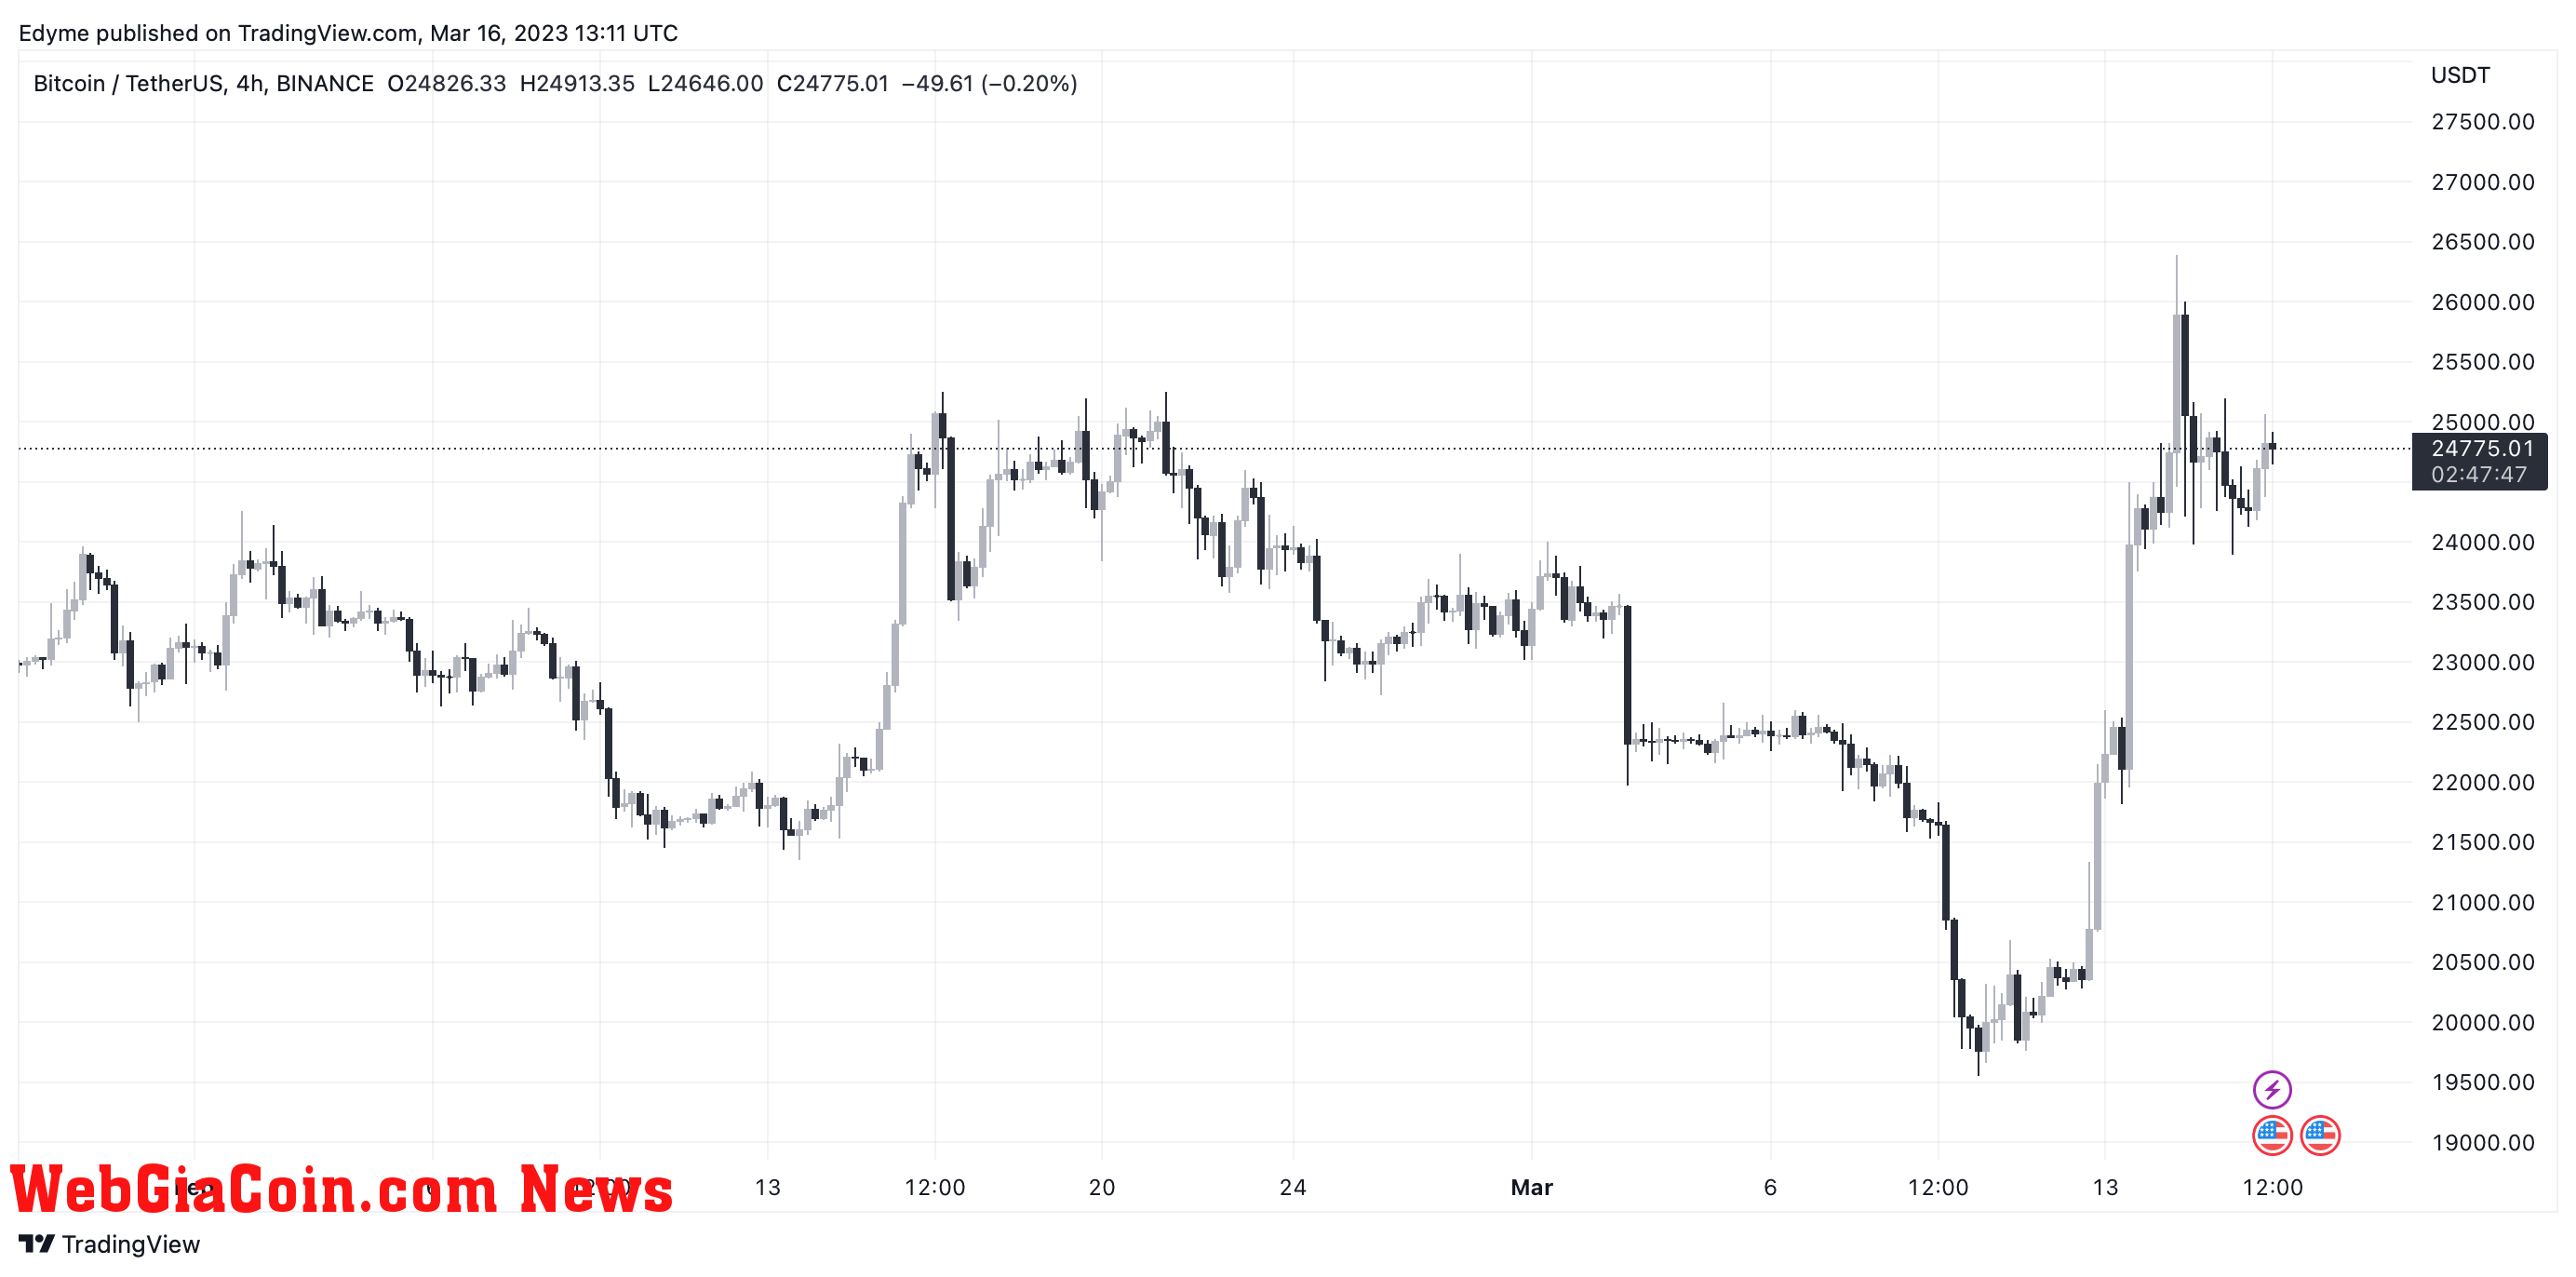 Bitcoin price chart on TradingView